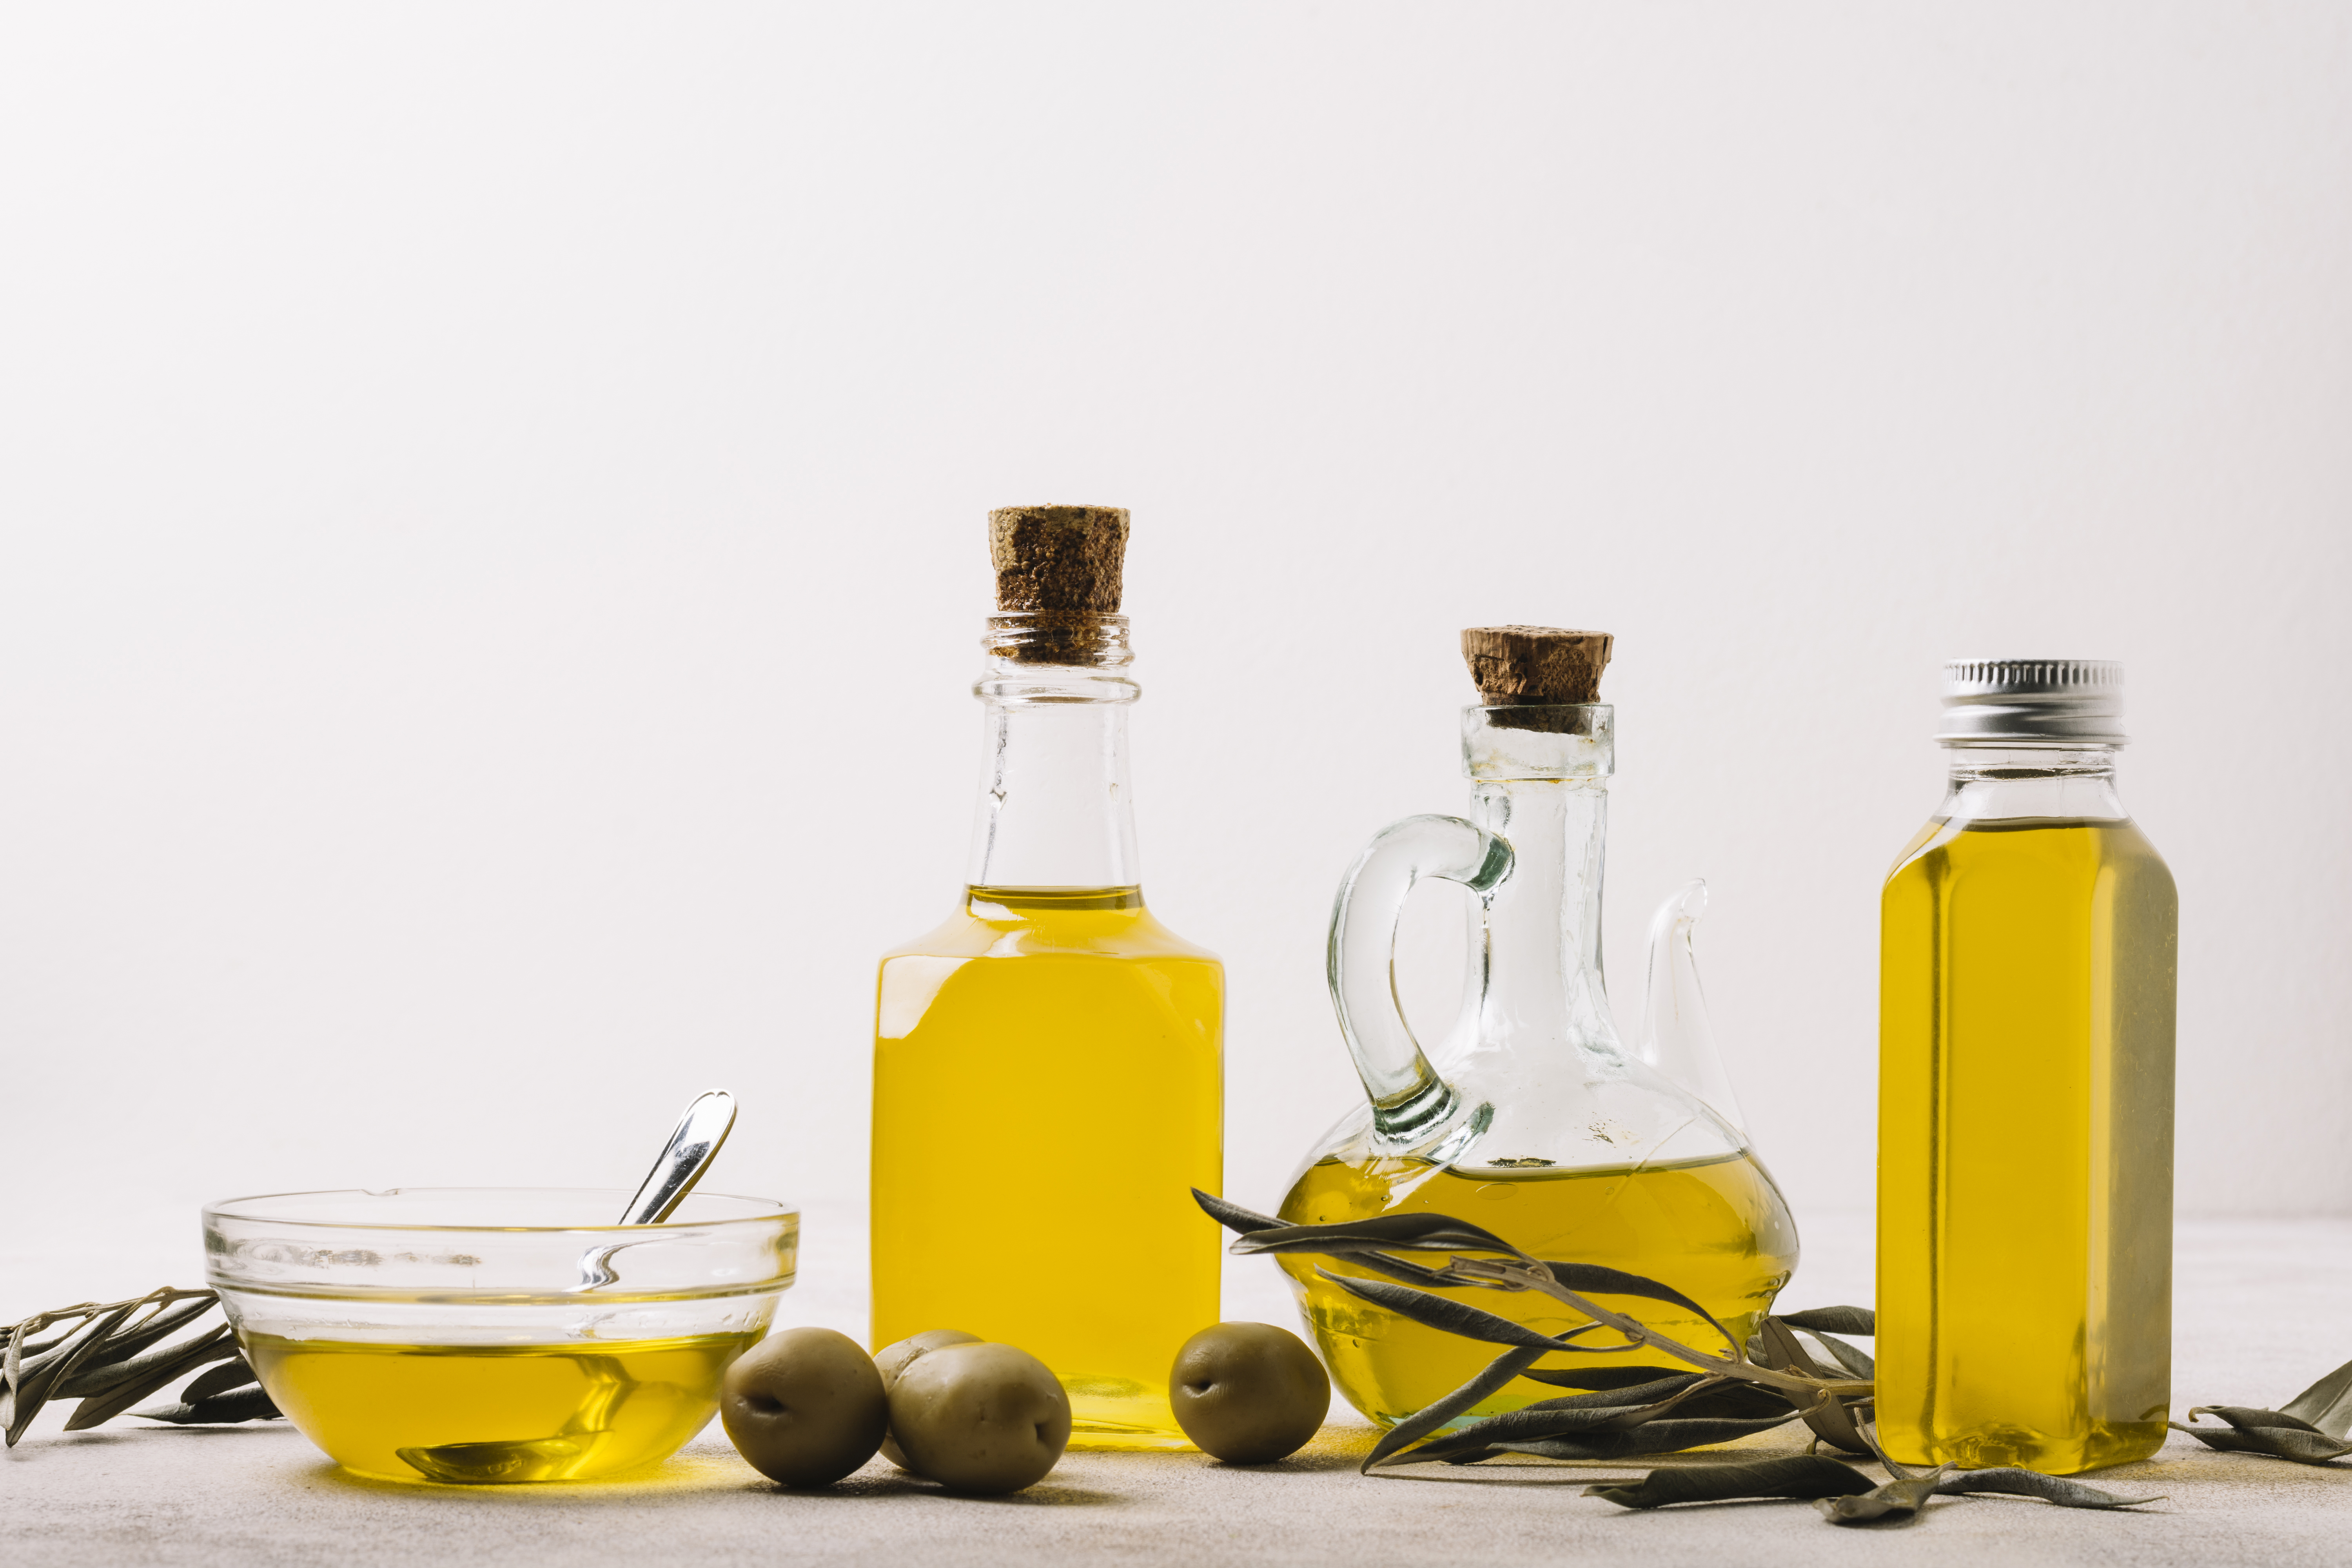 A bottle of olive oil. Оливковое масло. Бутылка оливкового масла. Бутылка для масла. Бутыль для оливкового масла.